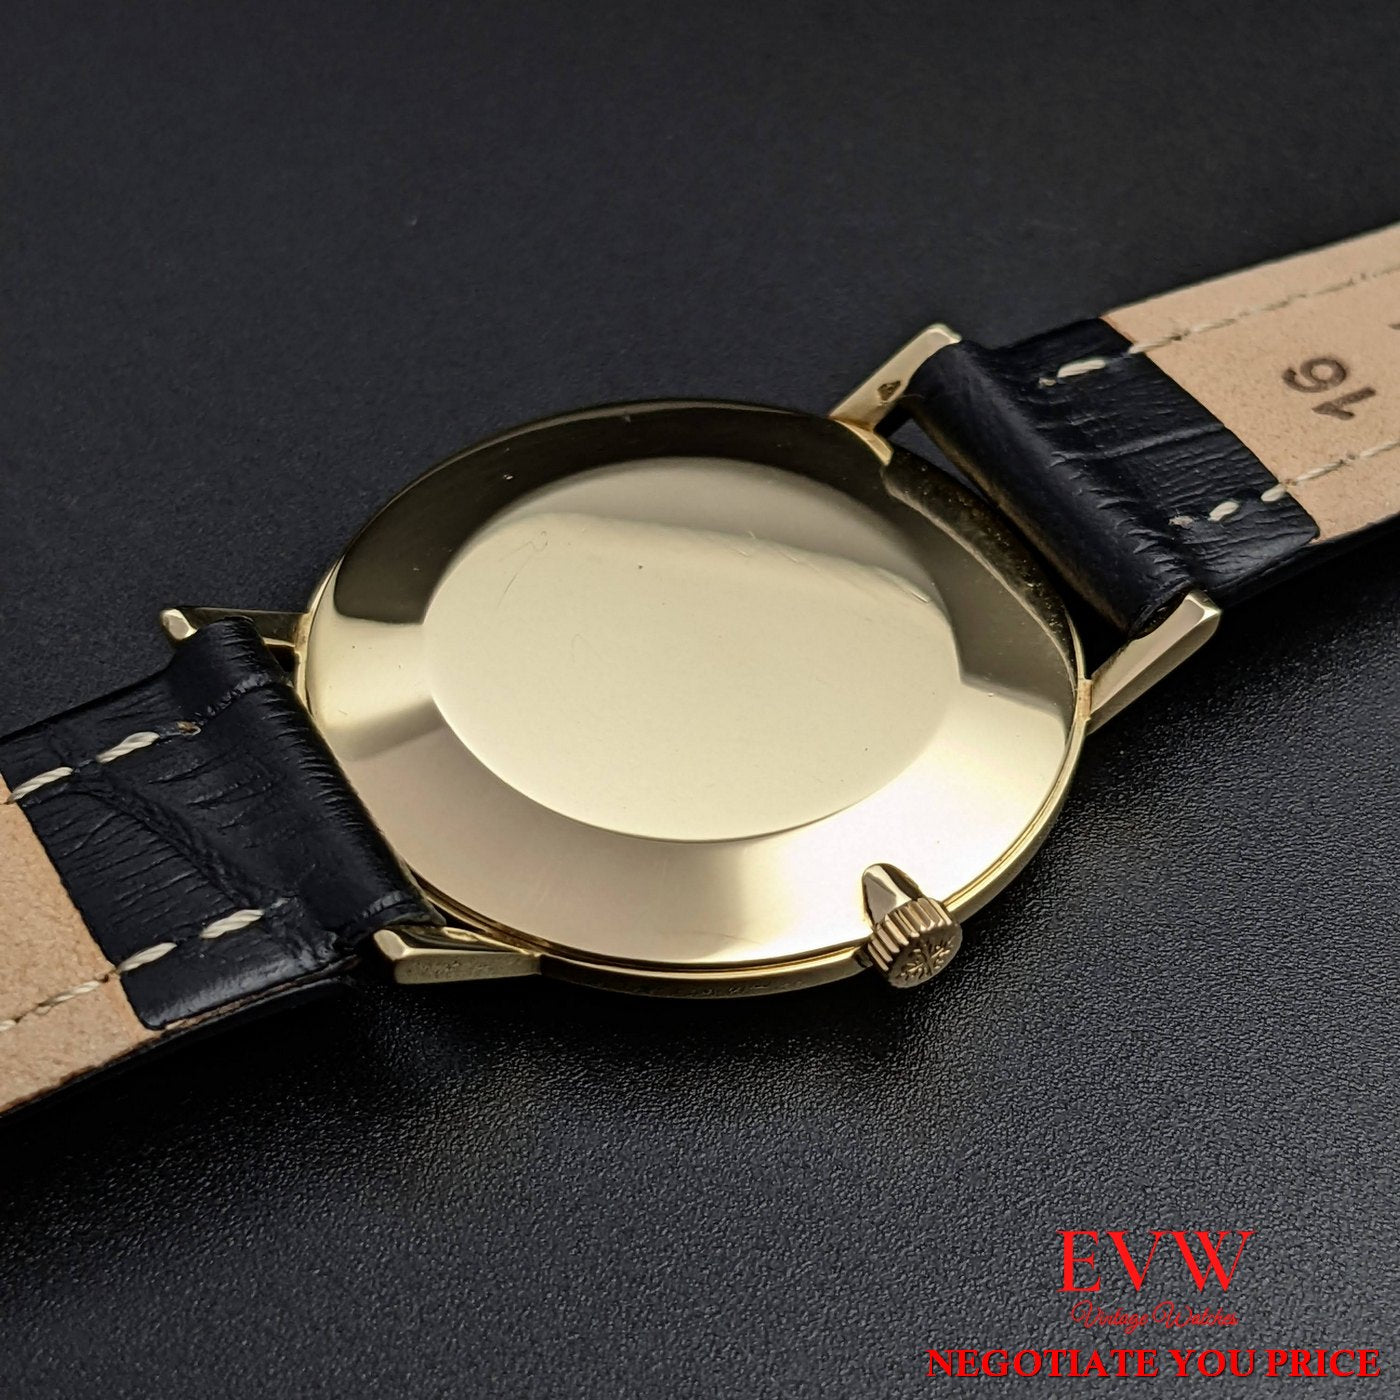 Patek Philippe Calatrava 18K Gold Vintage Watch , calibre 175,ref. 3520